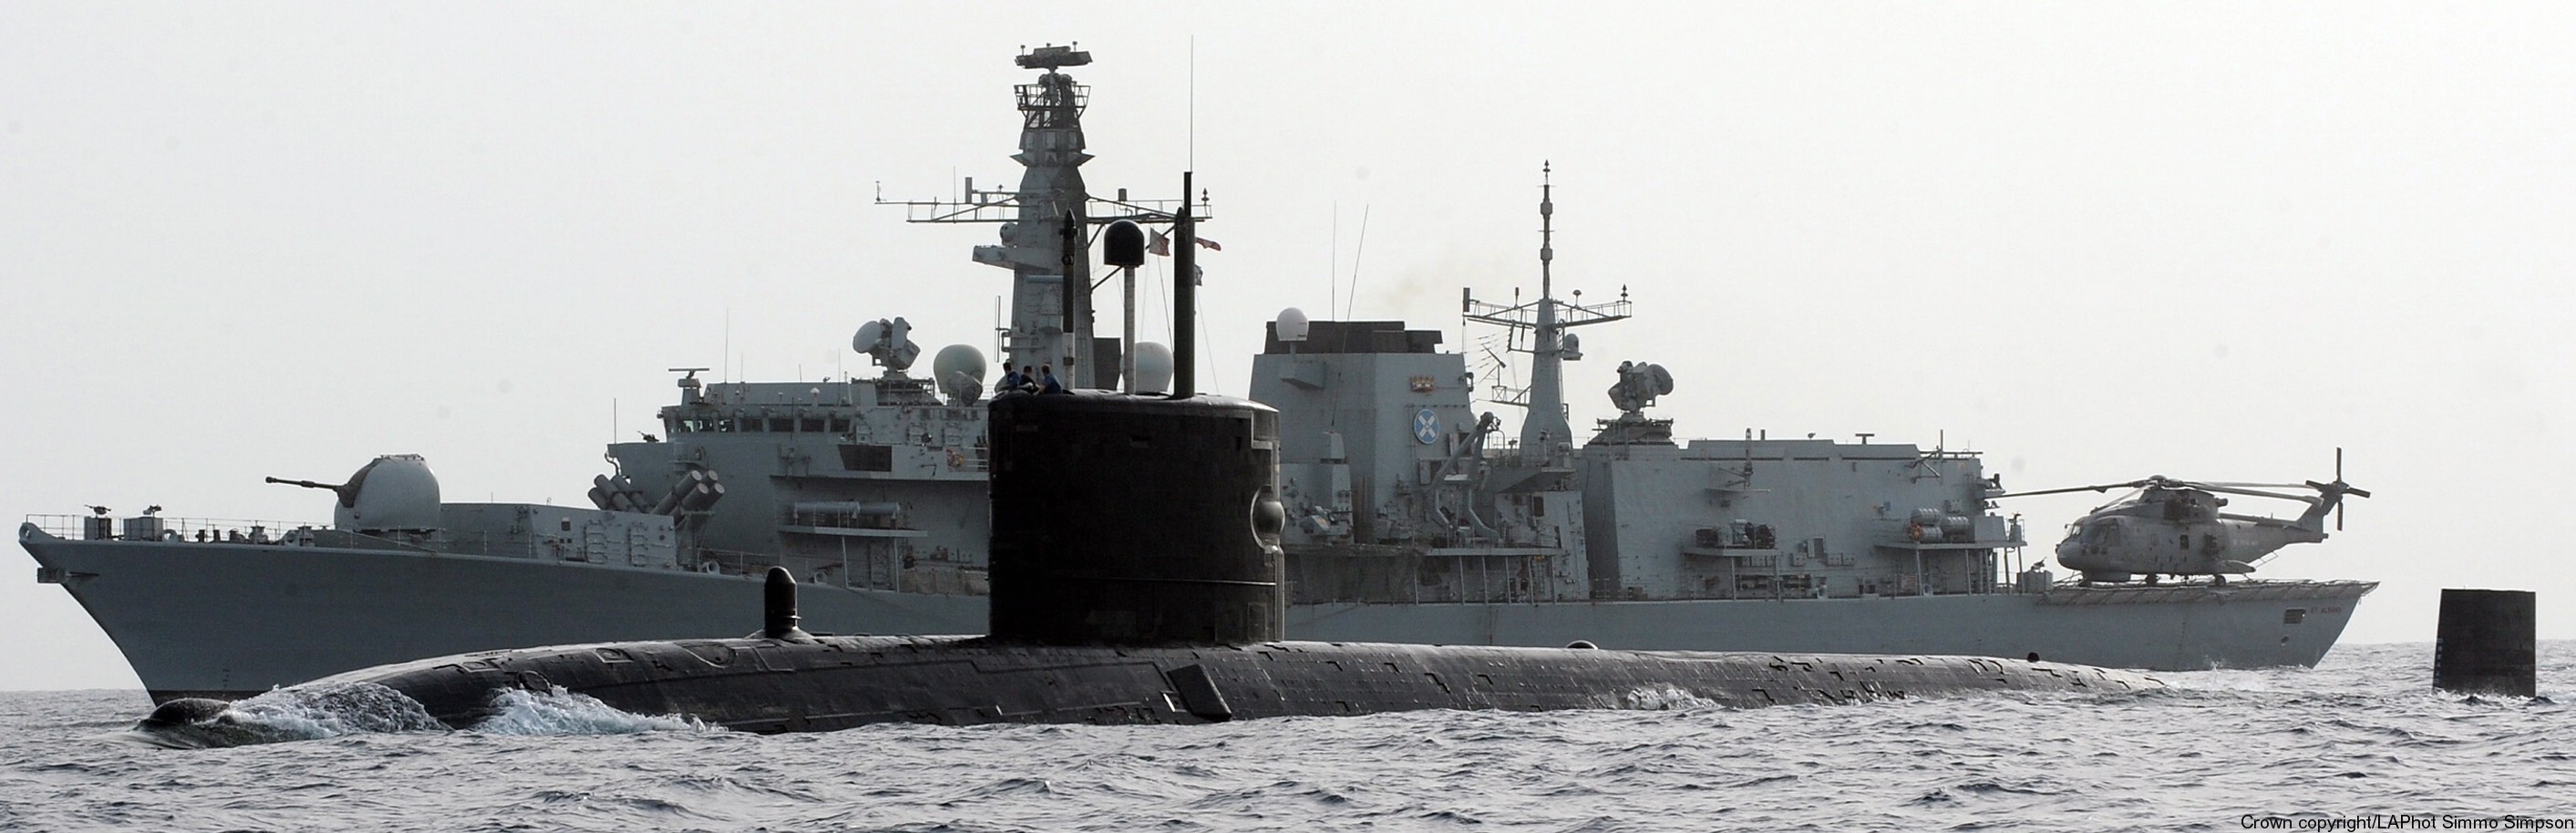 s87 hms turbulent trafalgar class attack submarine hunter killer royal navy 04